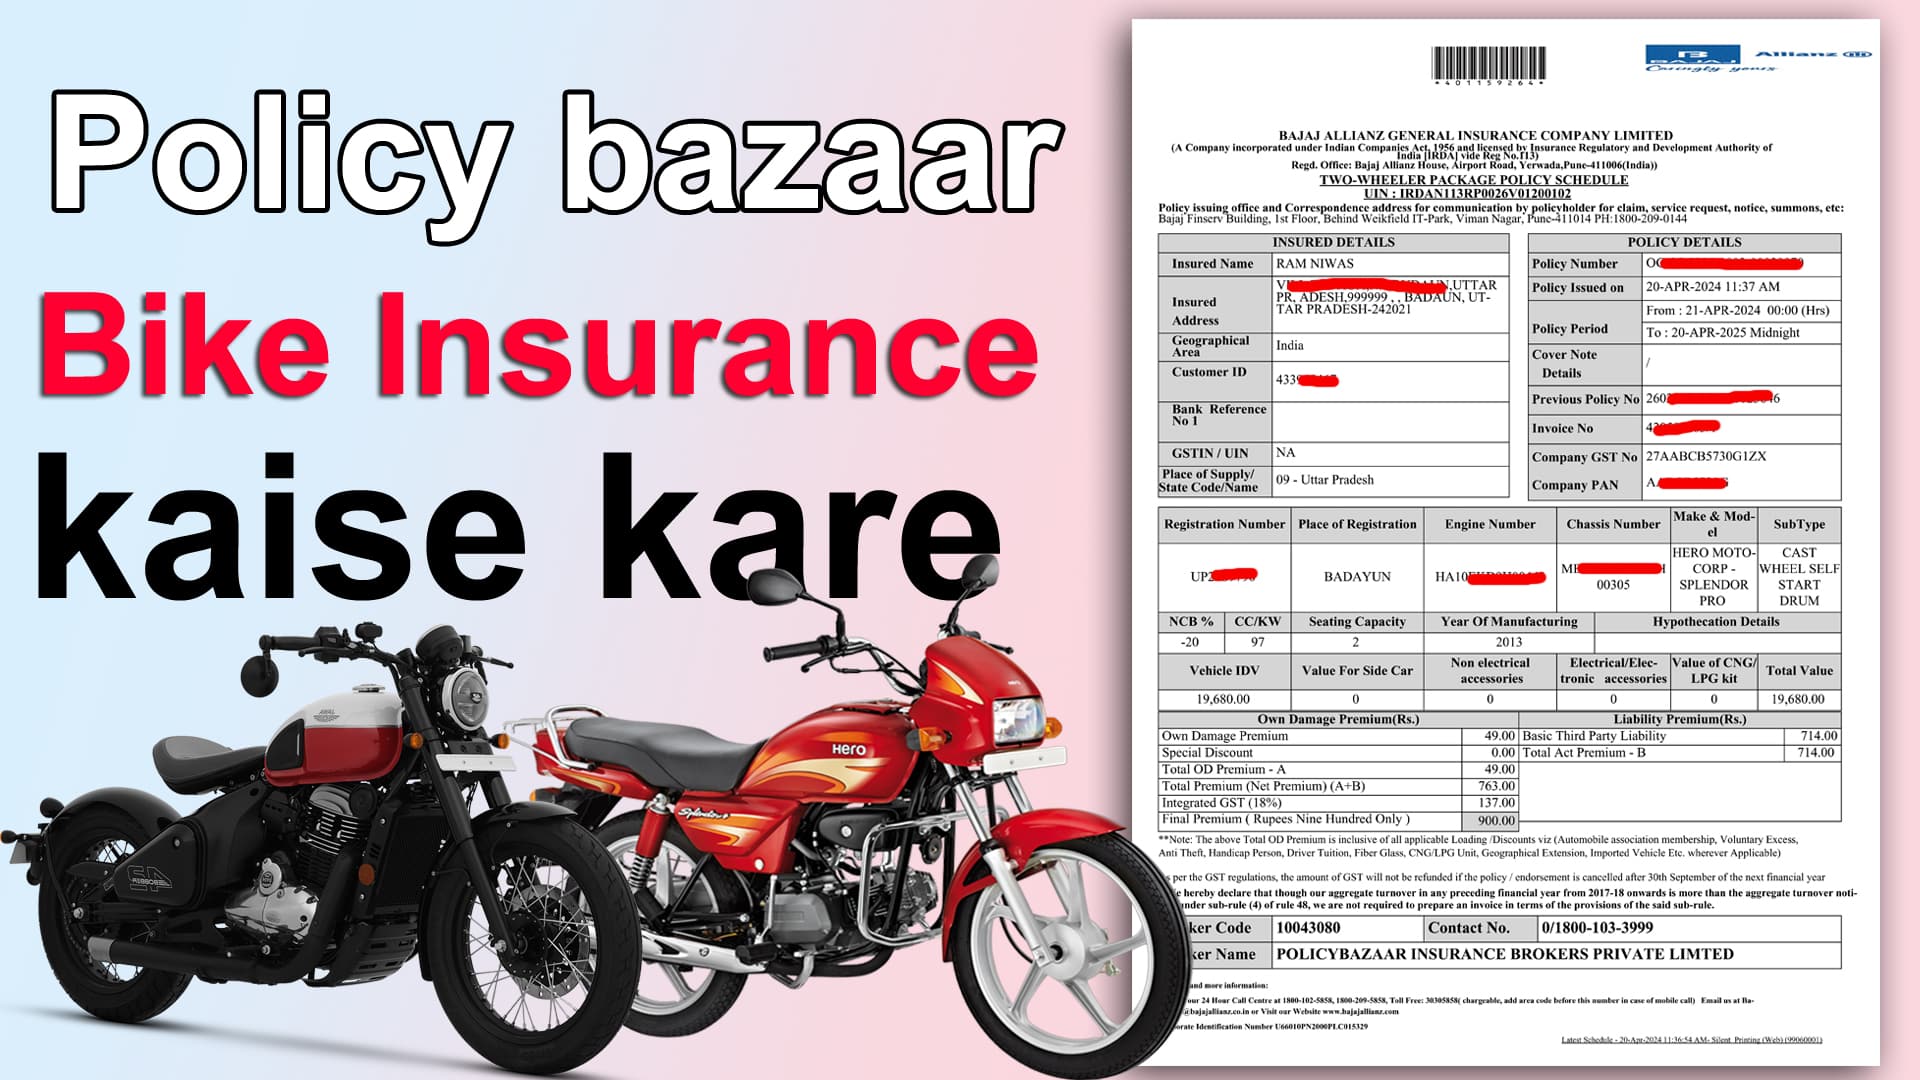 Policybazaar bike insurance